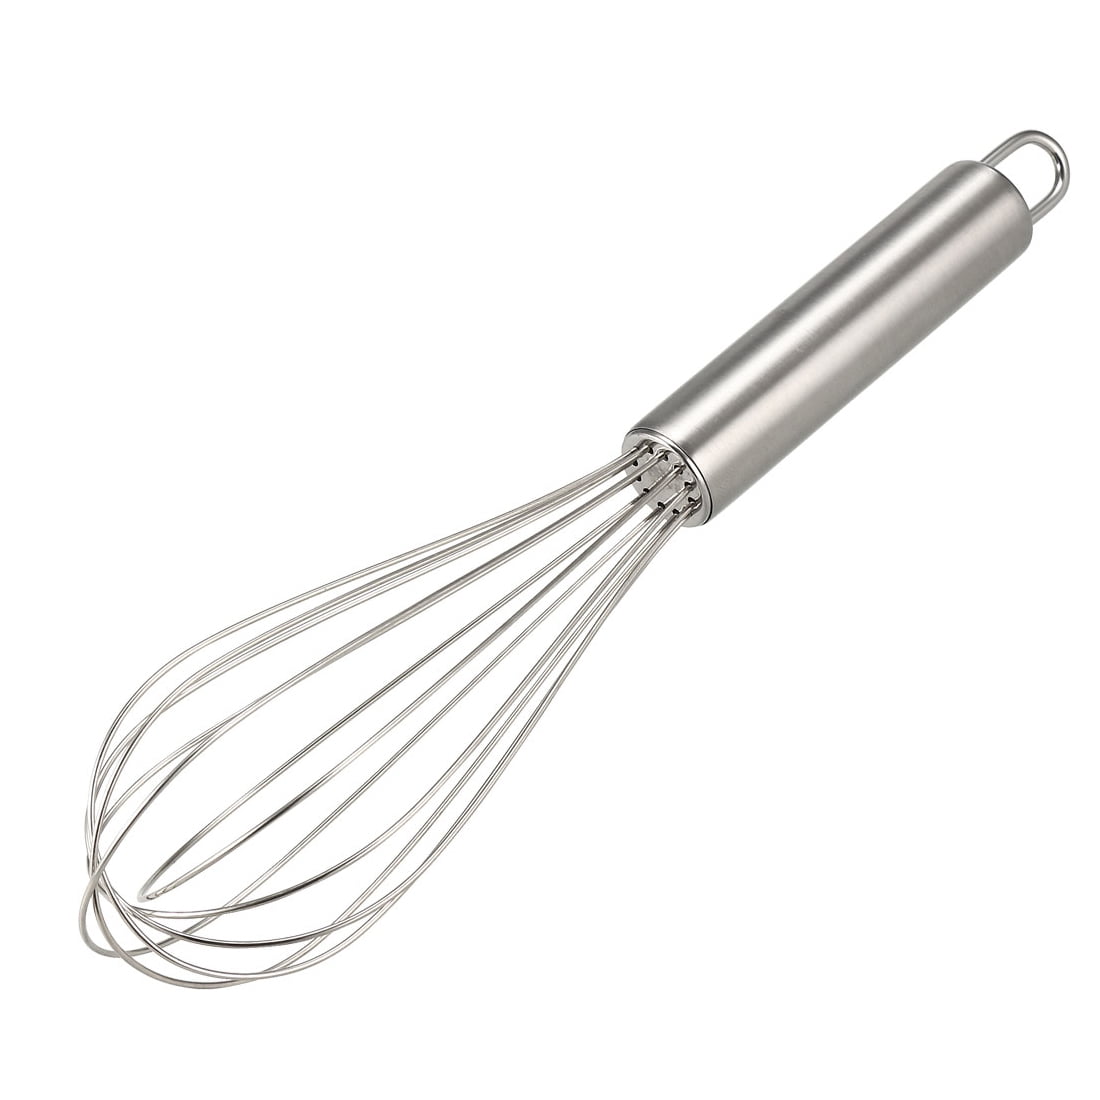  Norpro Balloon Wire Whisk Set of 3 Stainless Steel  Stir/Mix/Beat 6 /8/ 10: Home & Kitchen